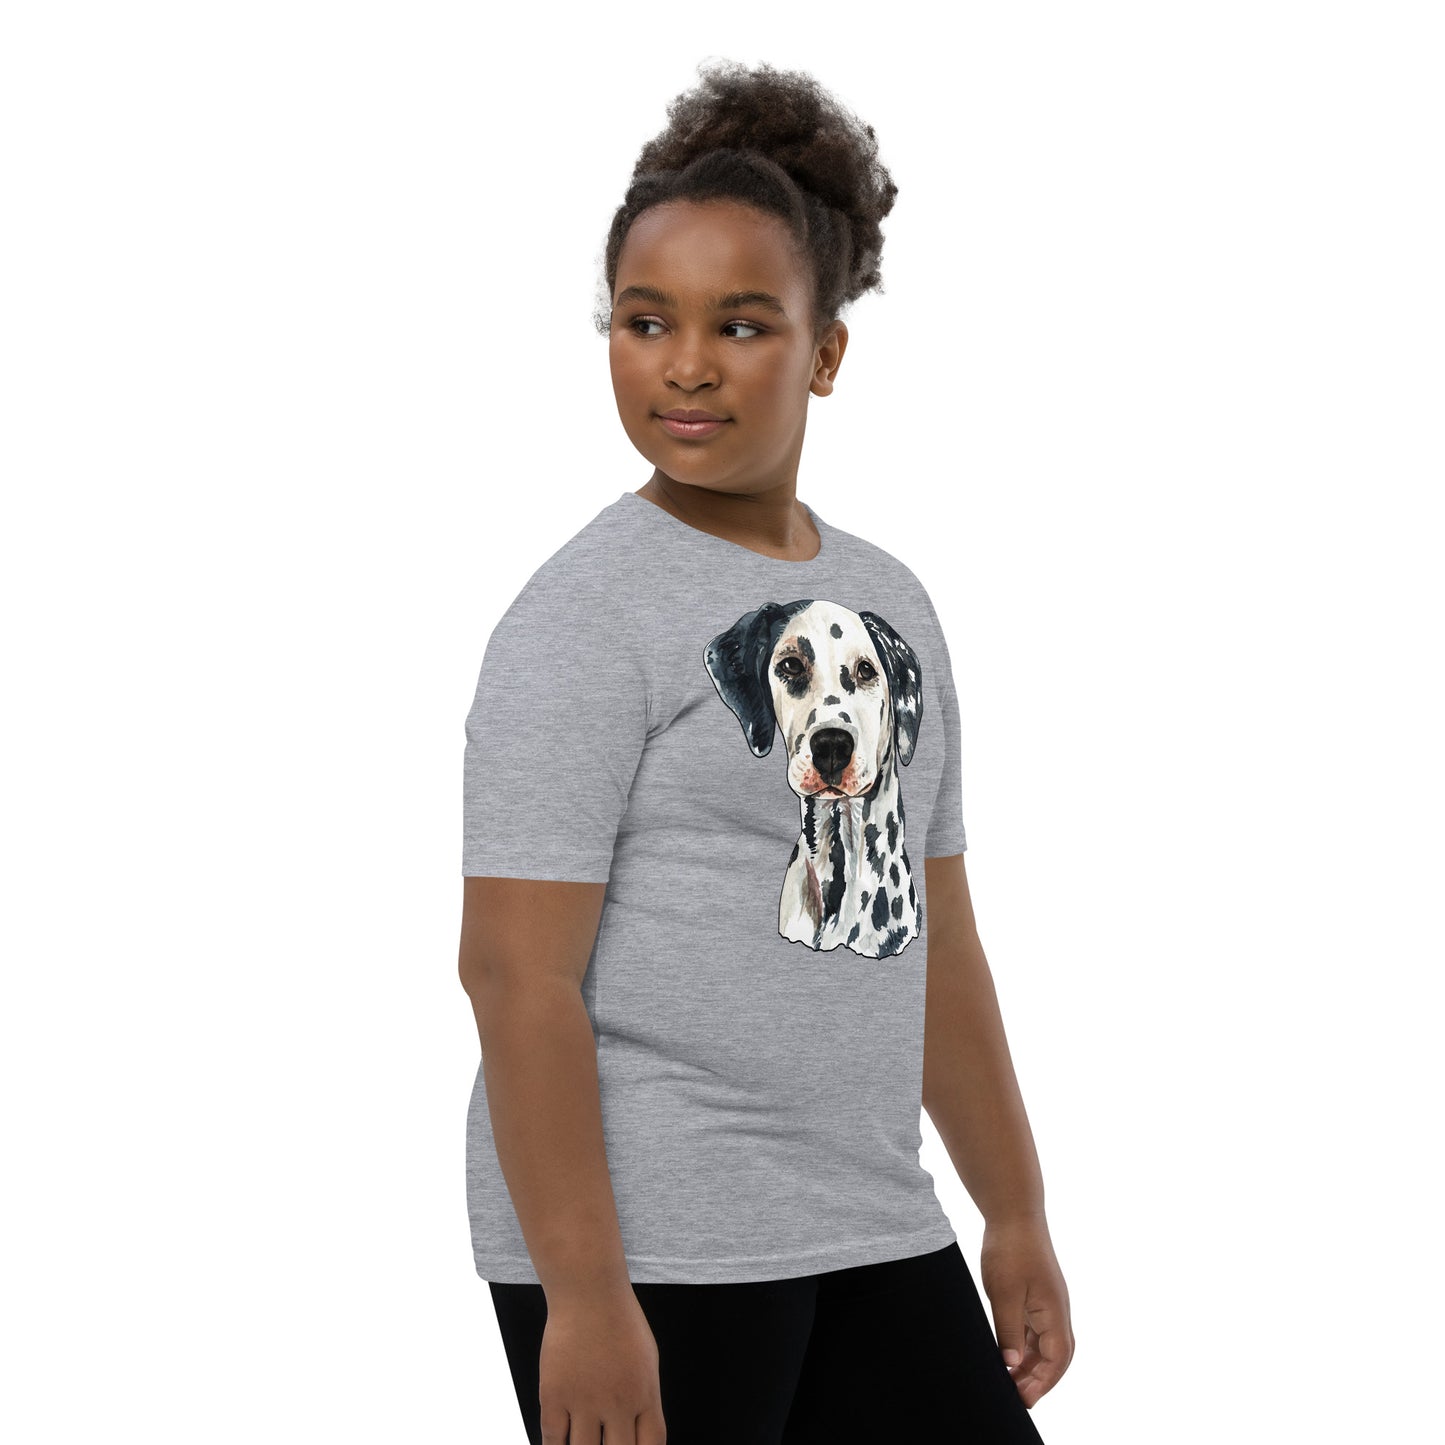 Cute Dalmatian Dog Portrait T-shirt, No. 0592